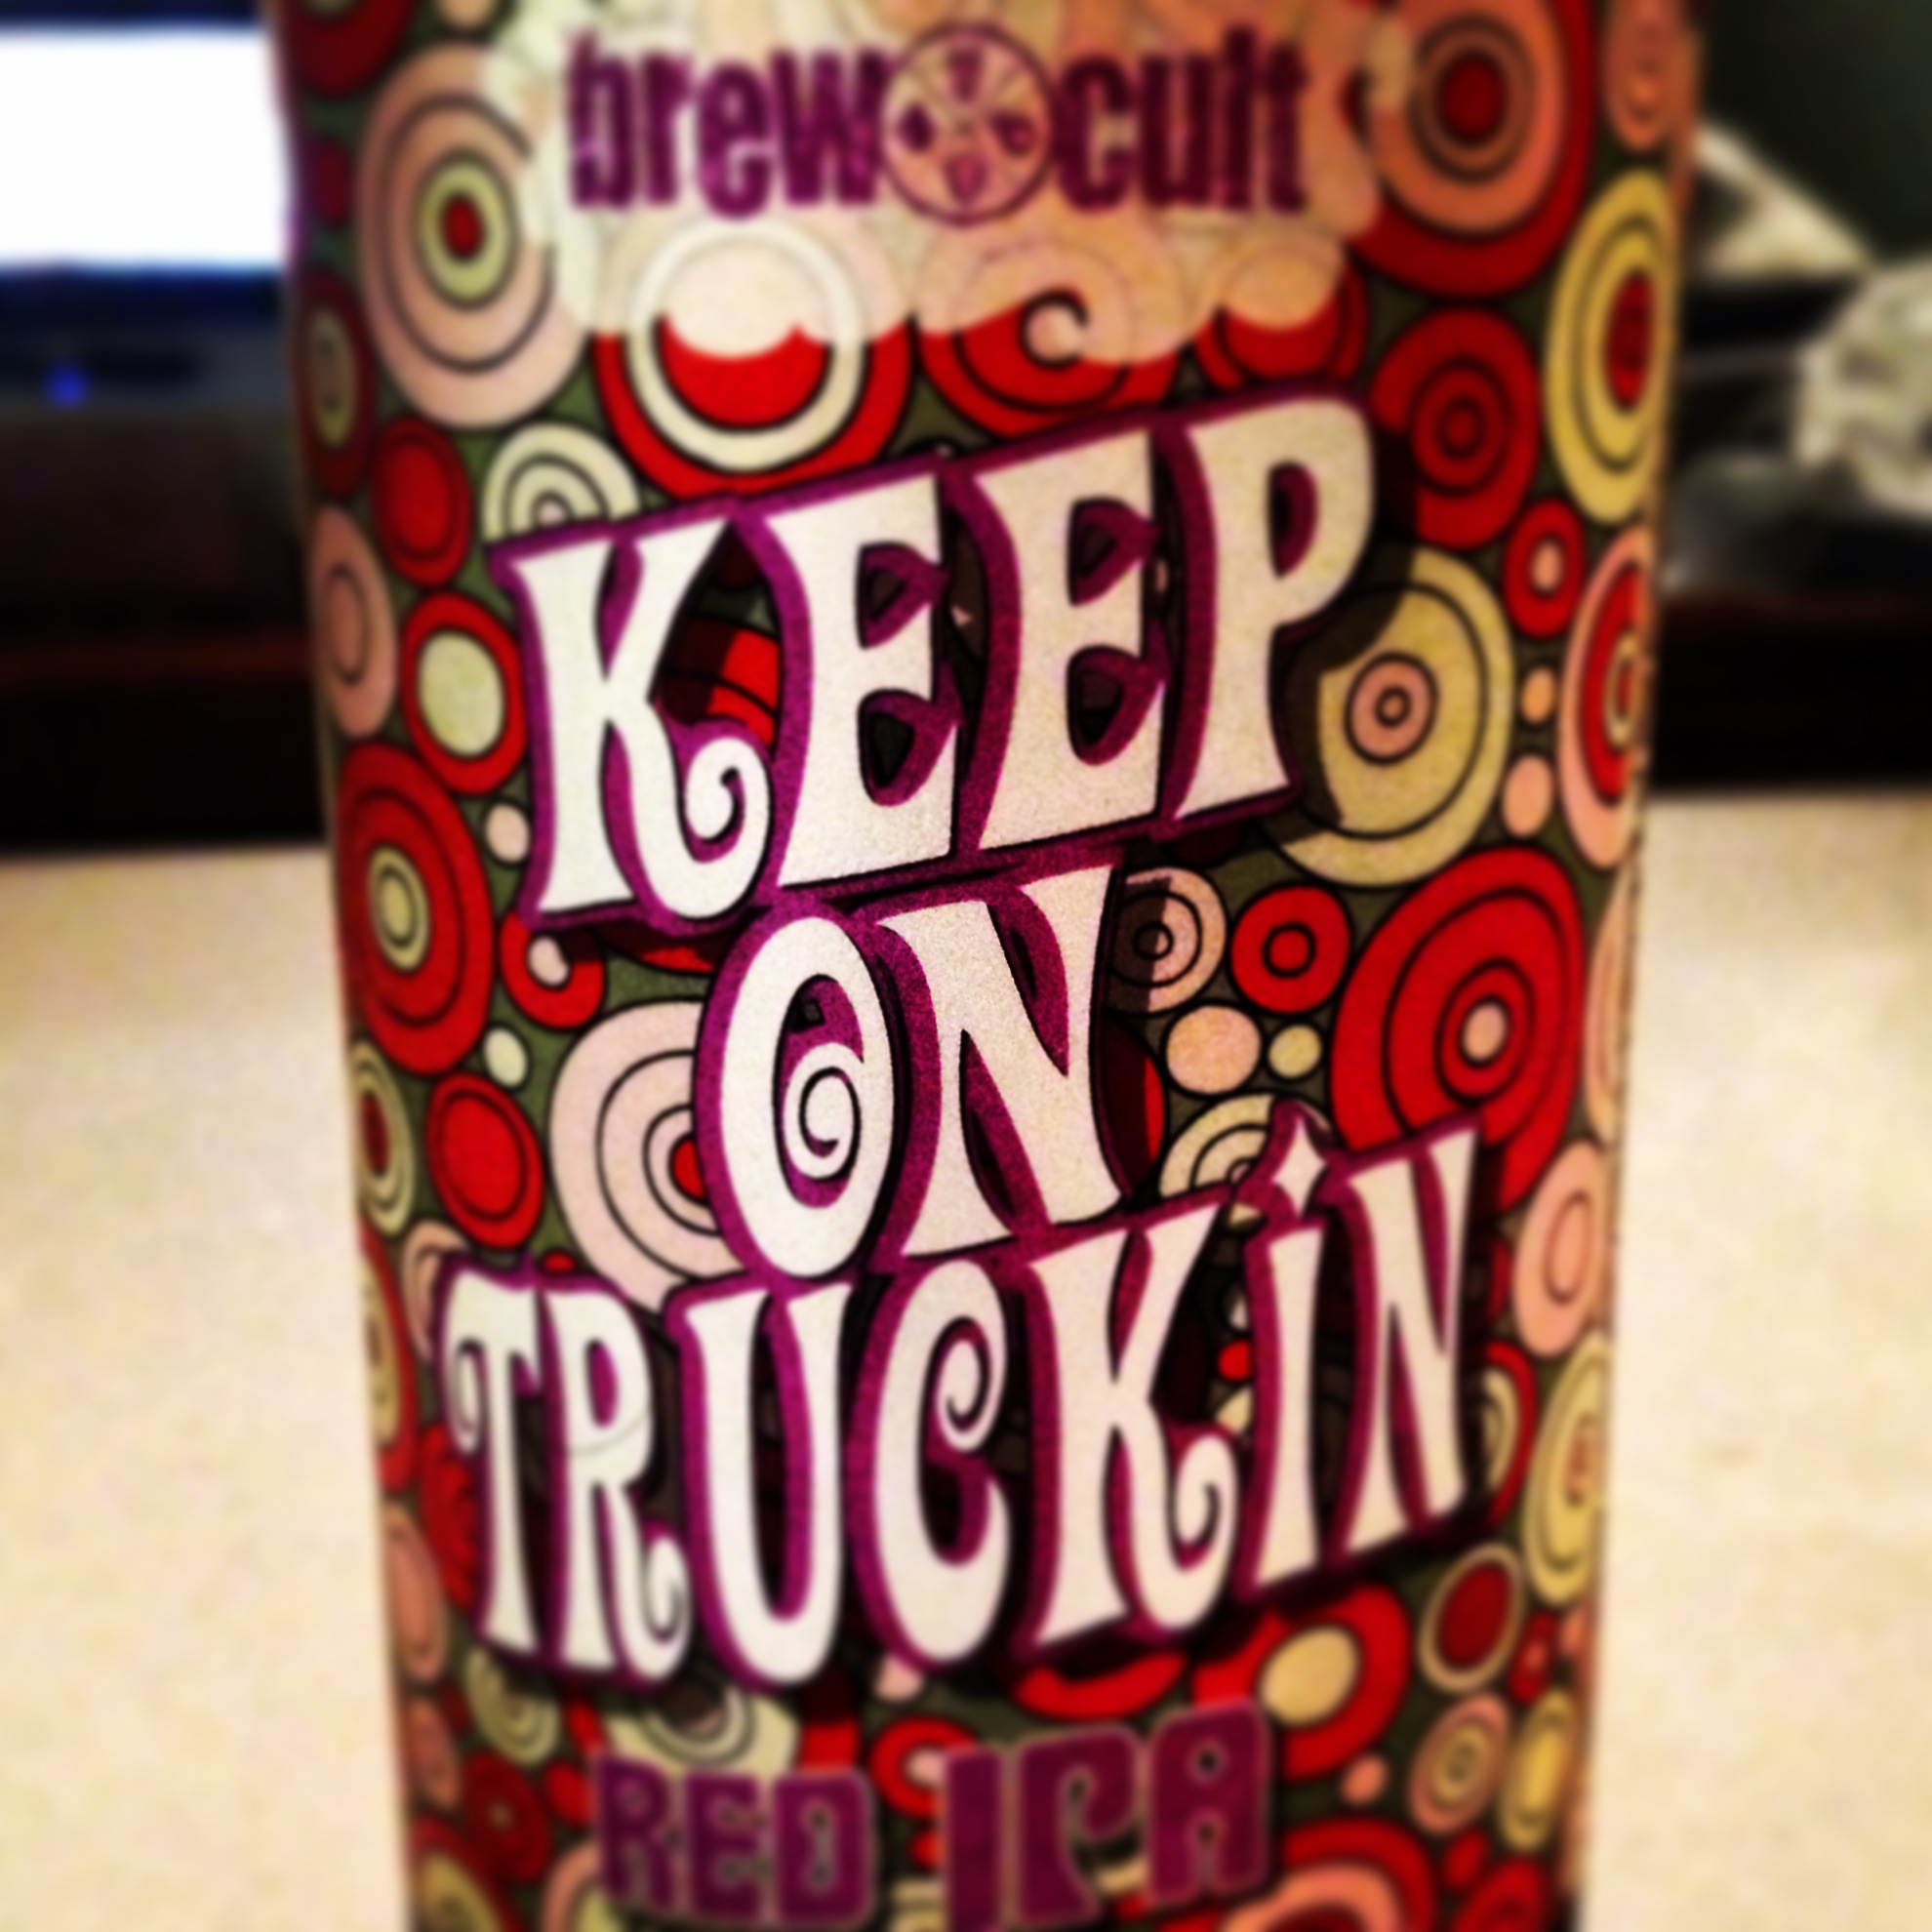 Keep On Truckin Logo Brewcult keep on truckin 001